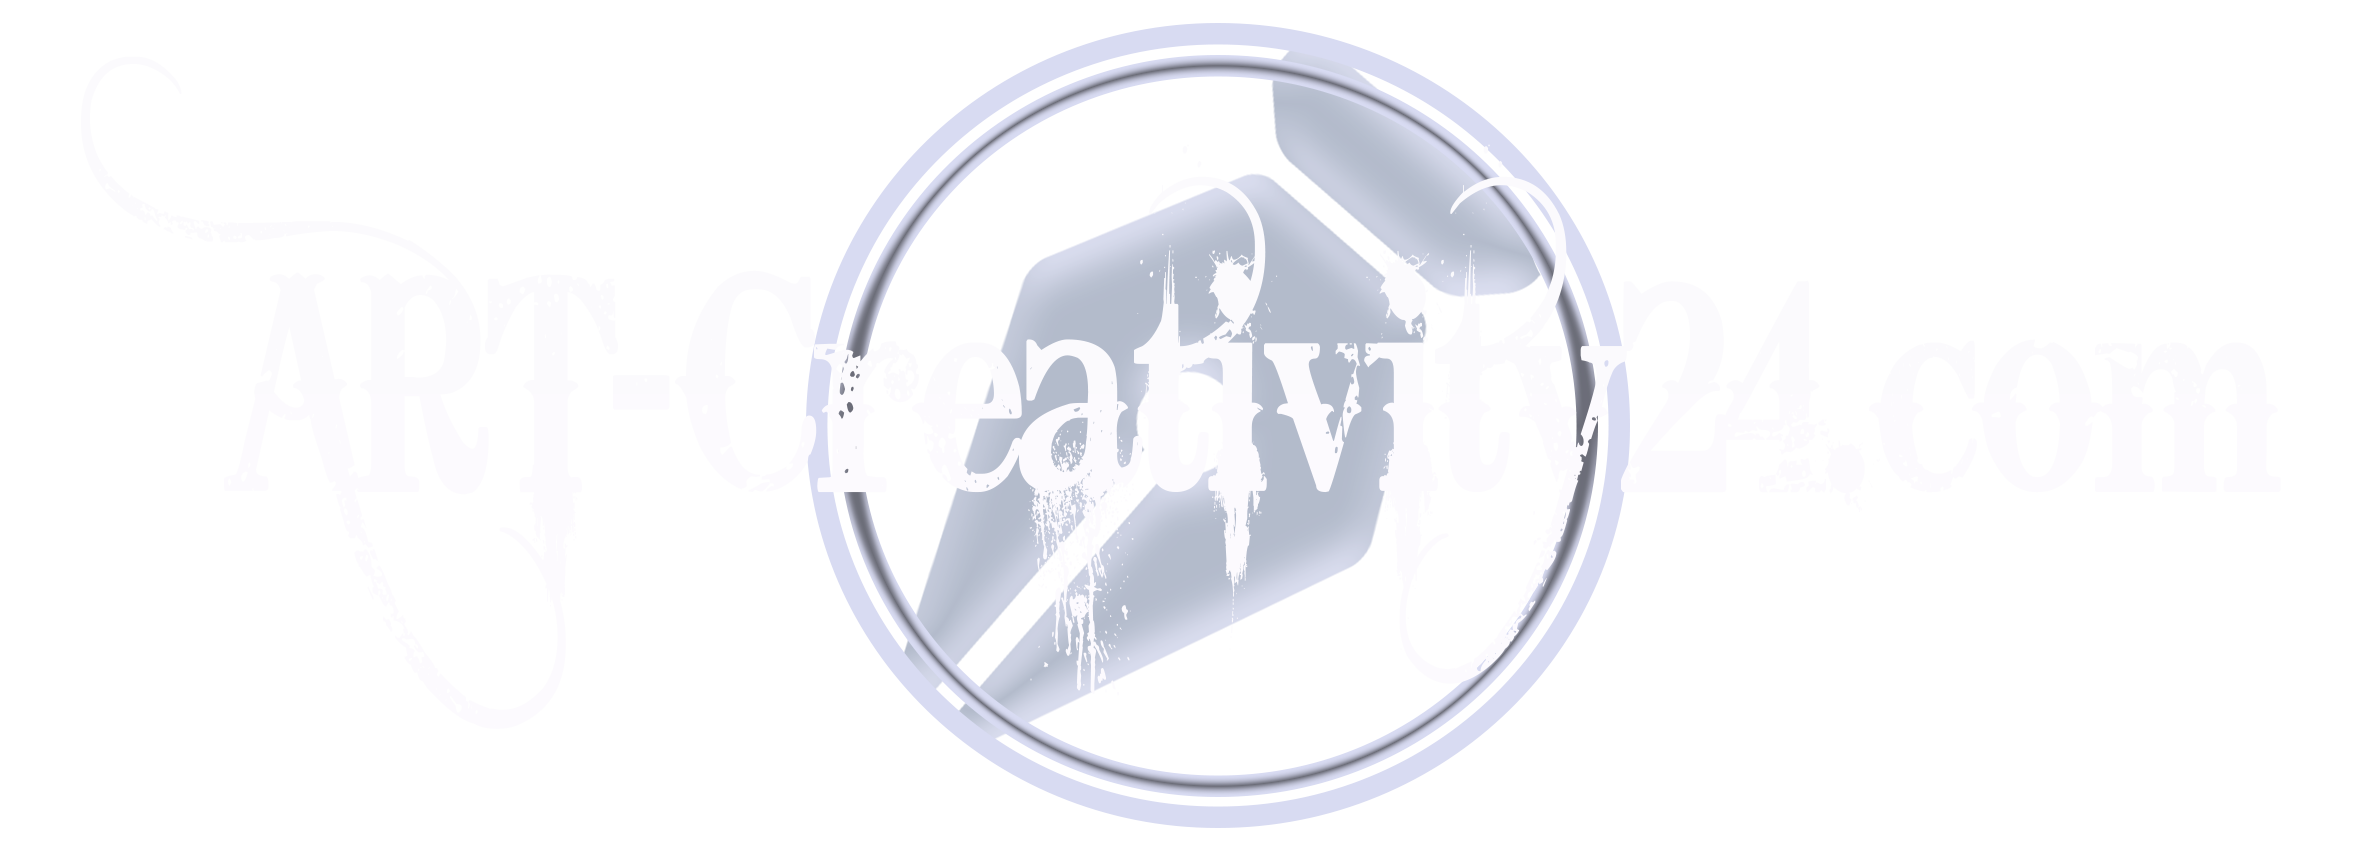 ART-CREATIVITY24